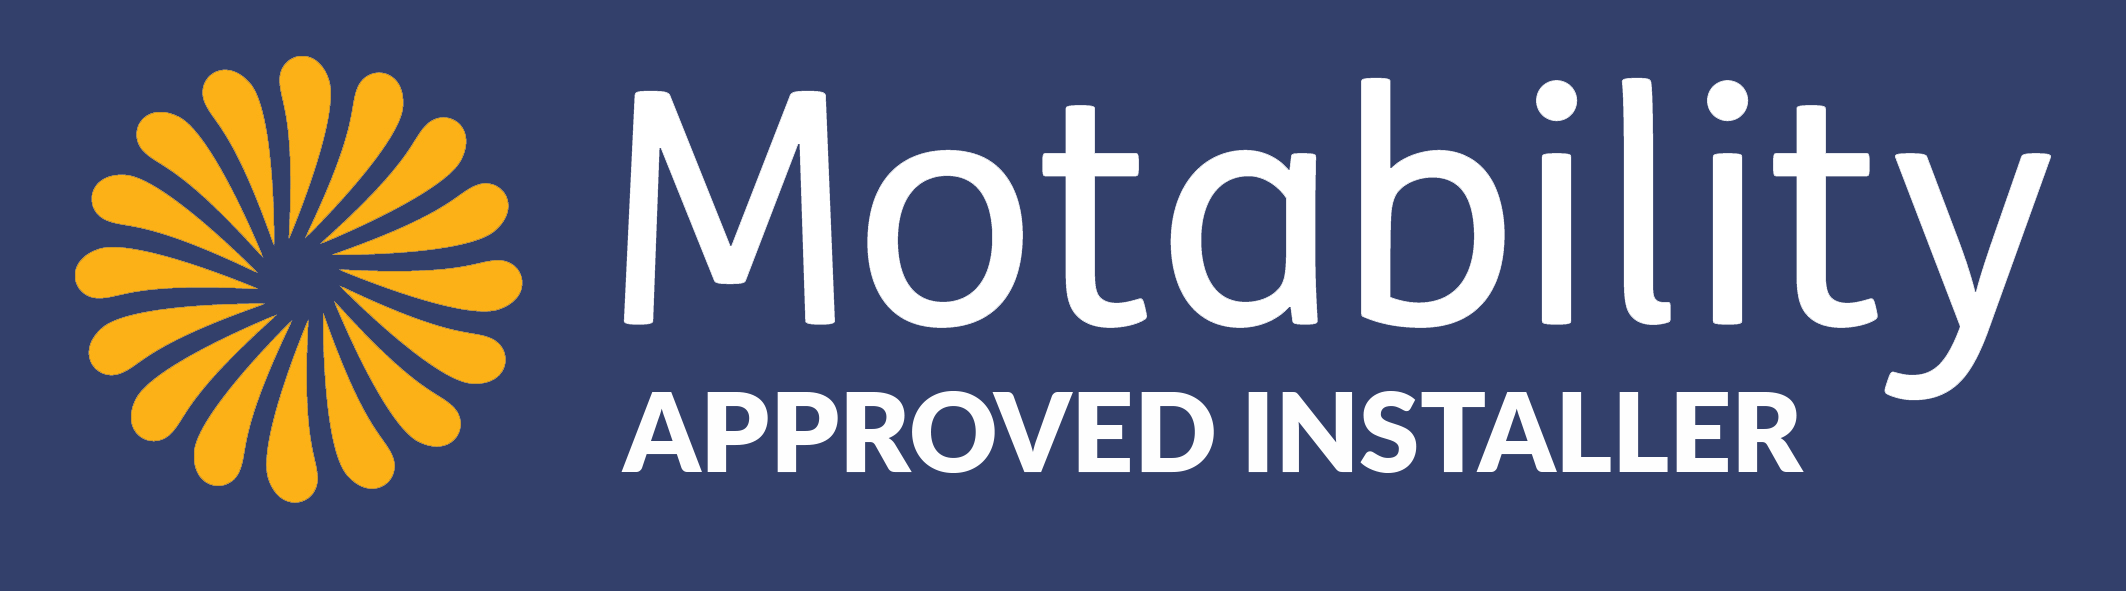 Motability approved installer